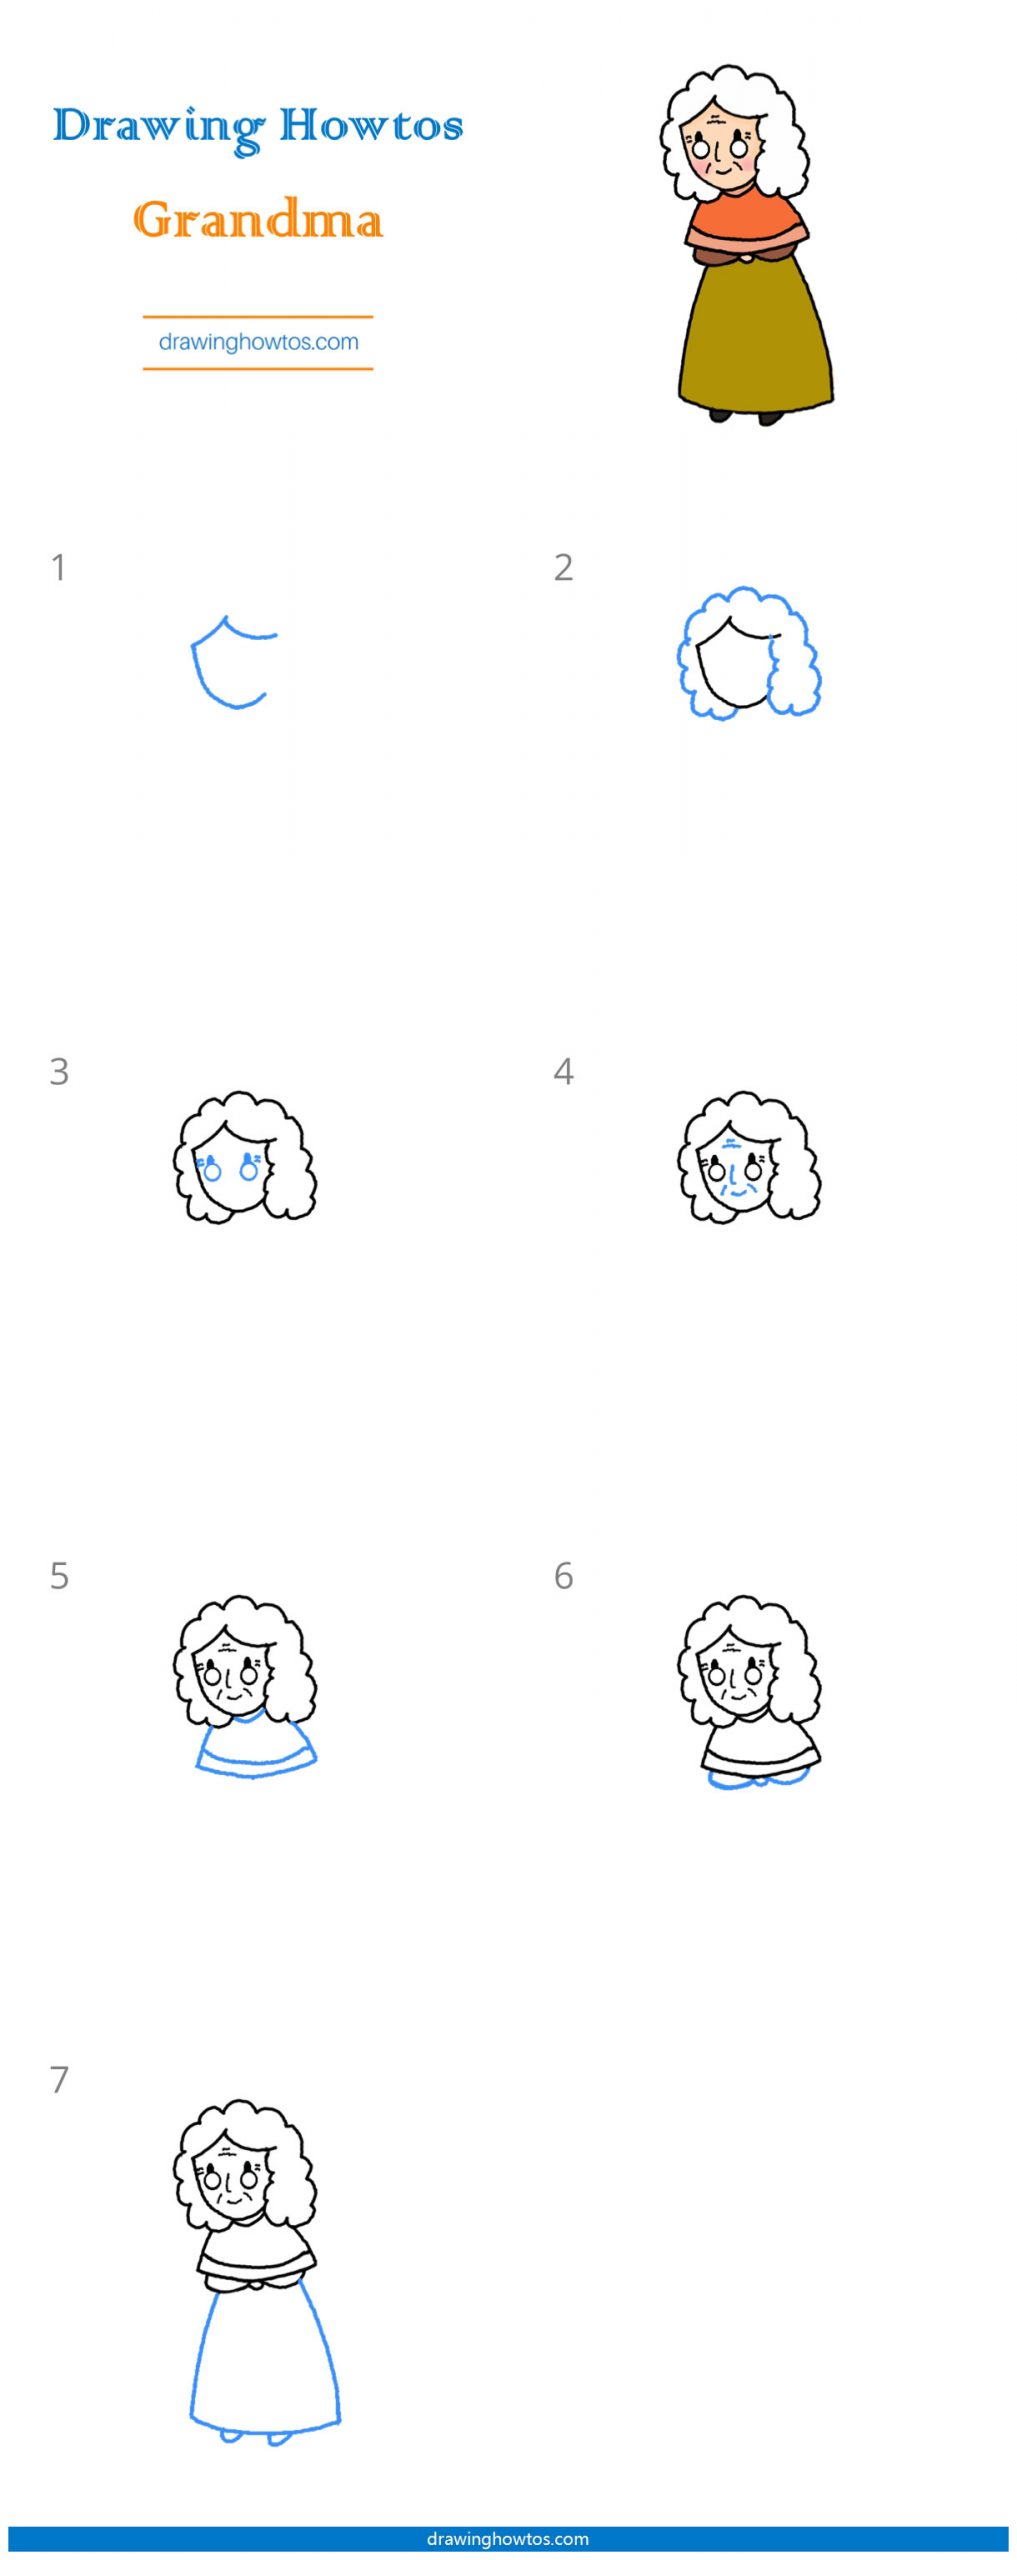 How to Draw a Grandma Step by Step